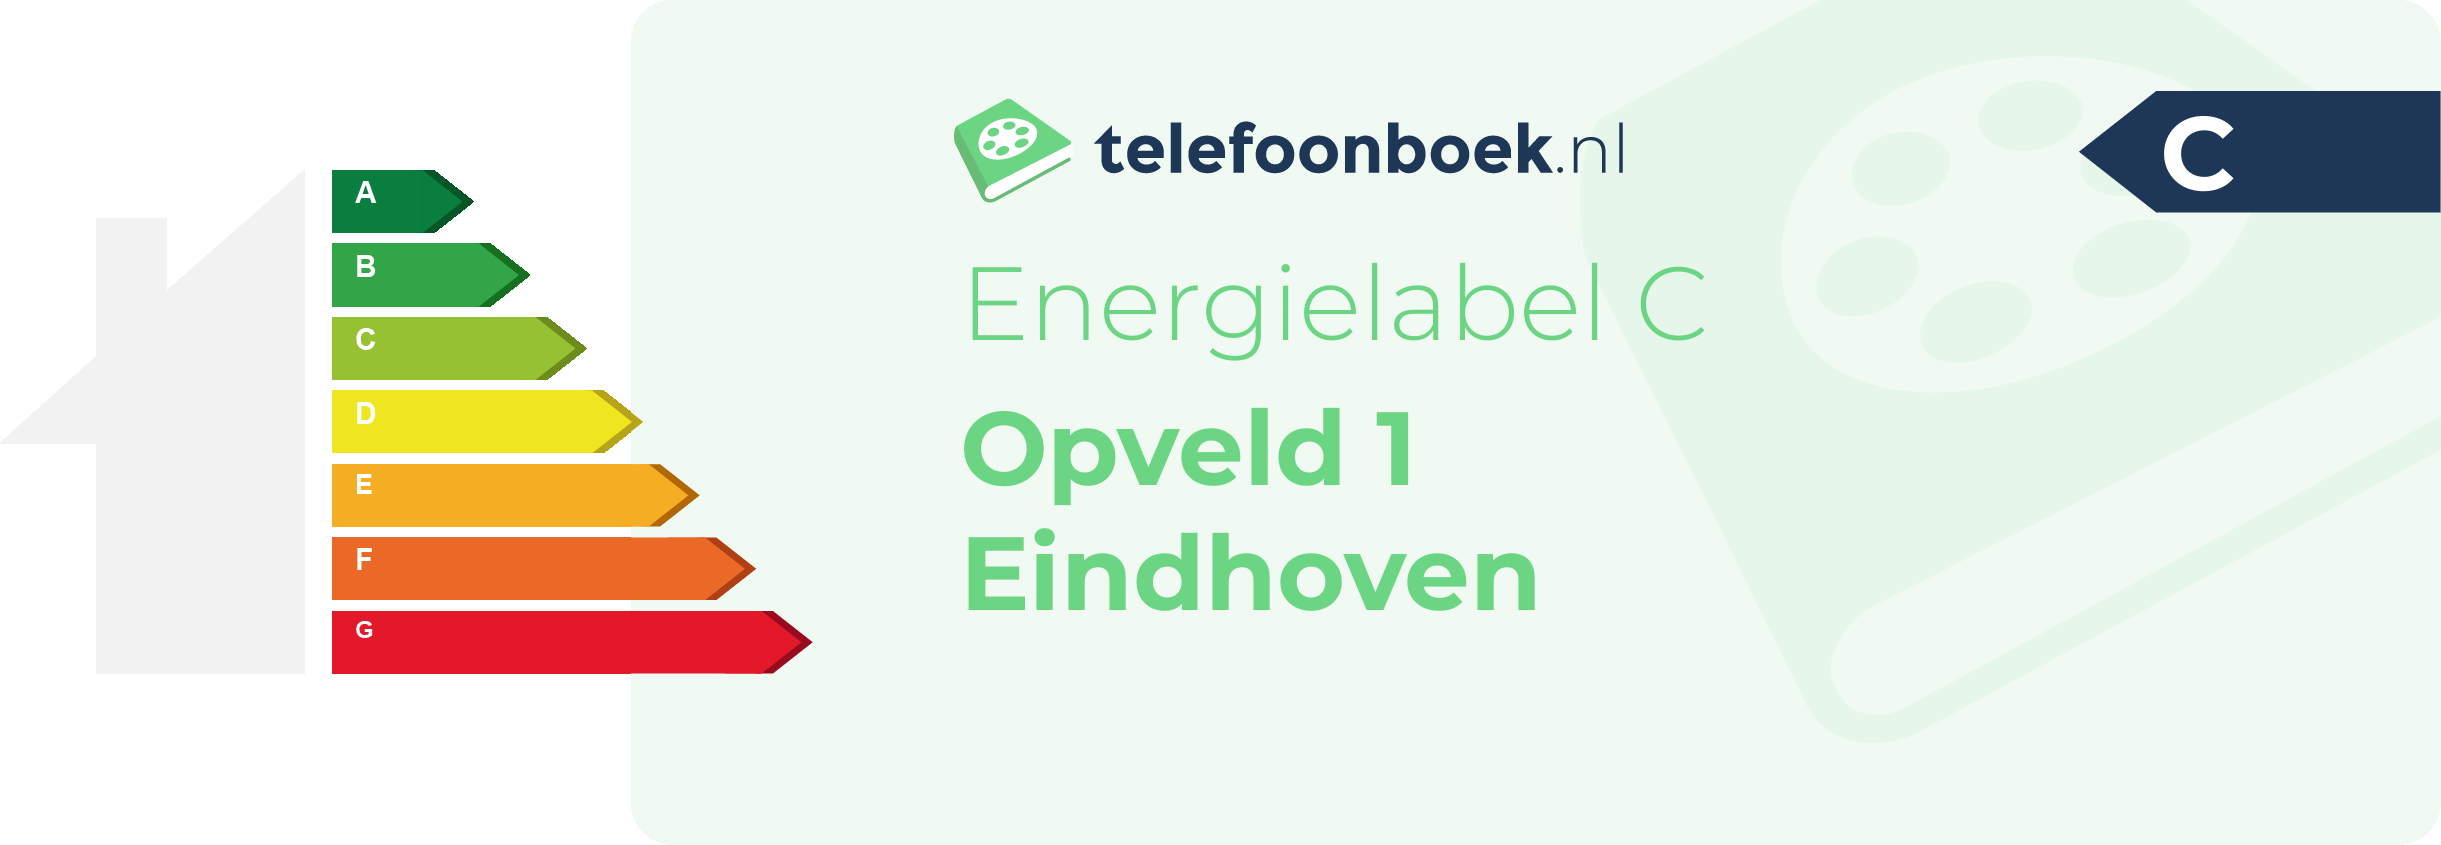 Energielabel Opveld 1 Eindhoven